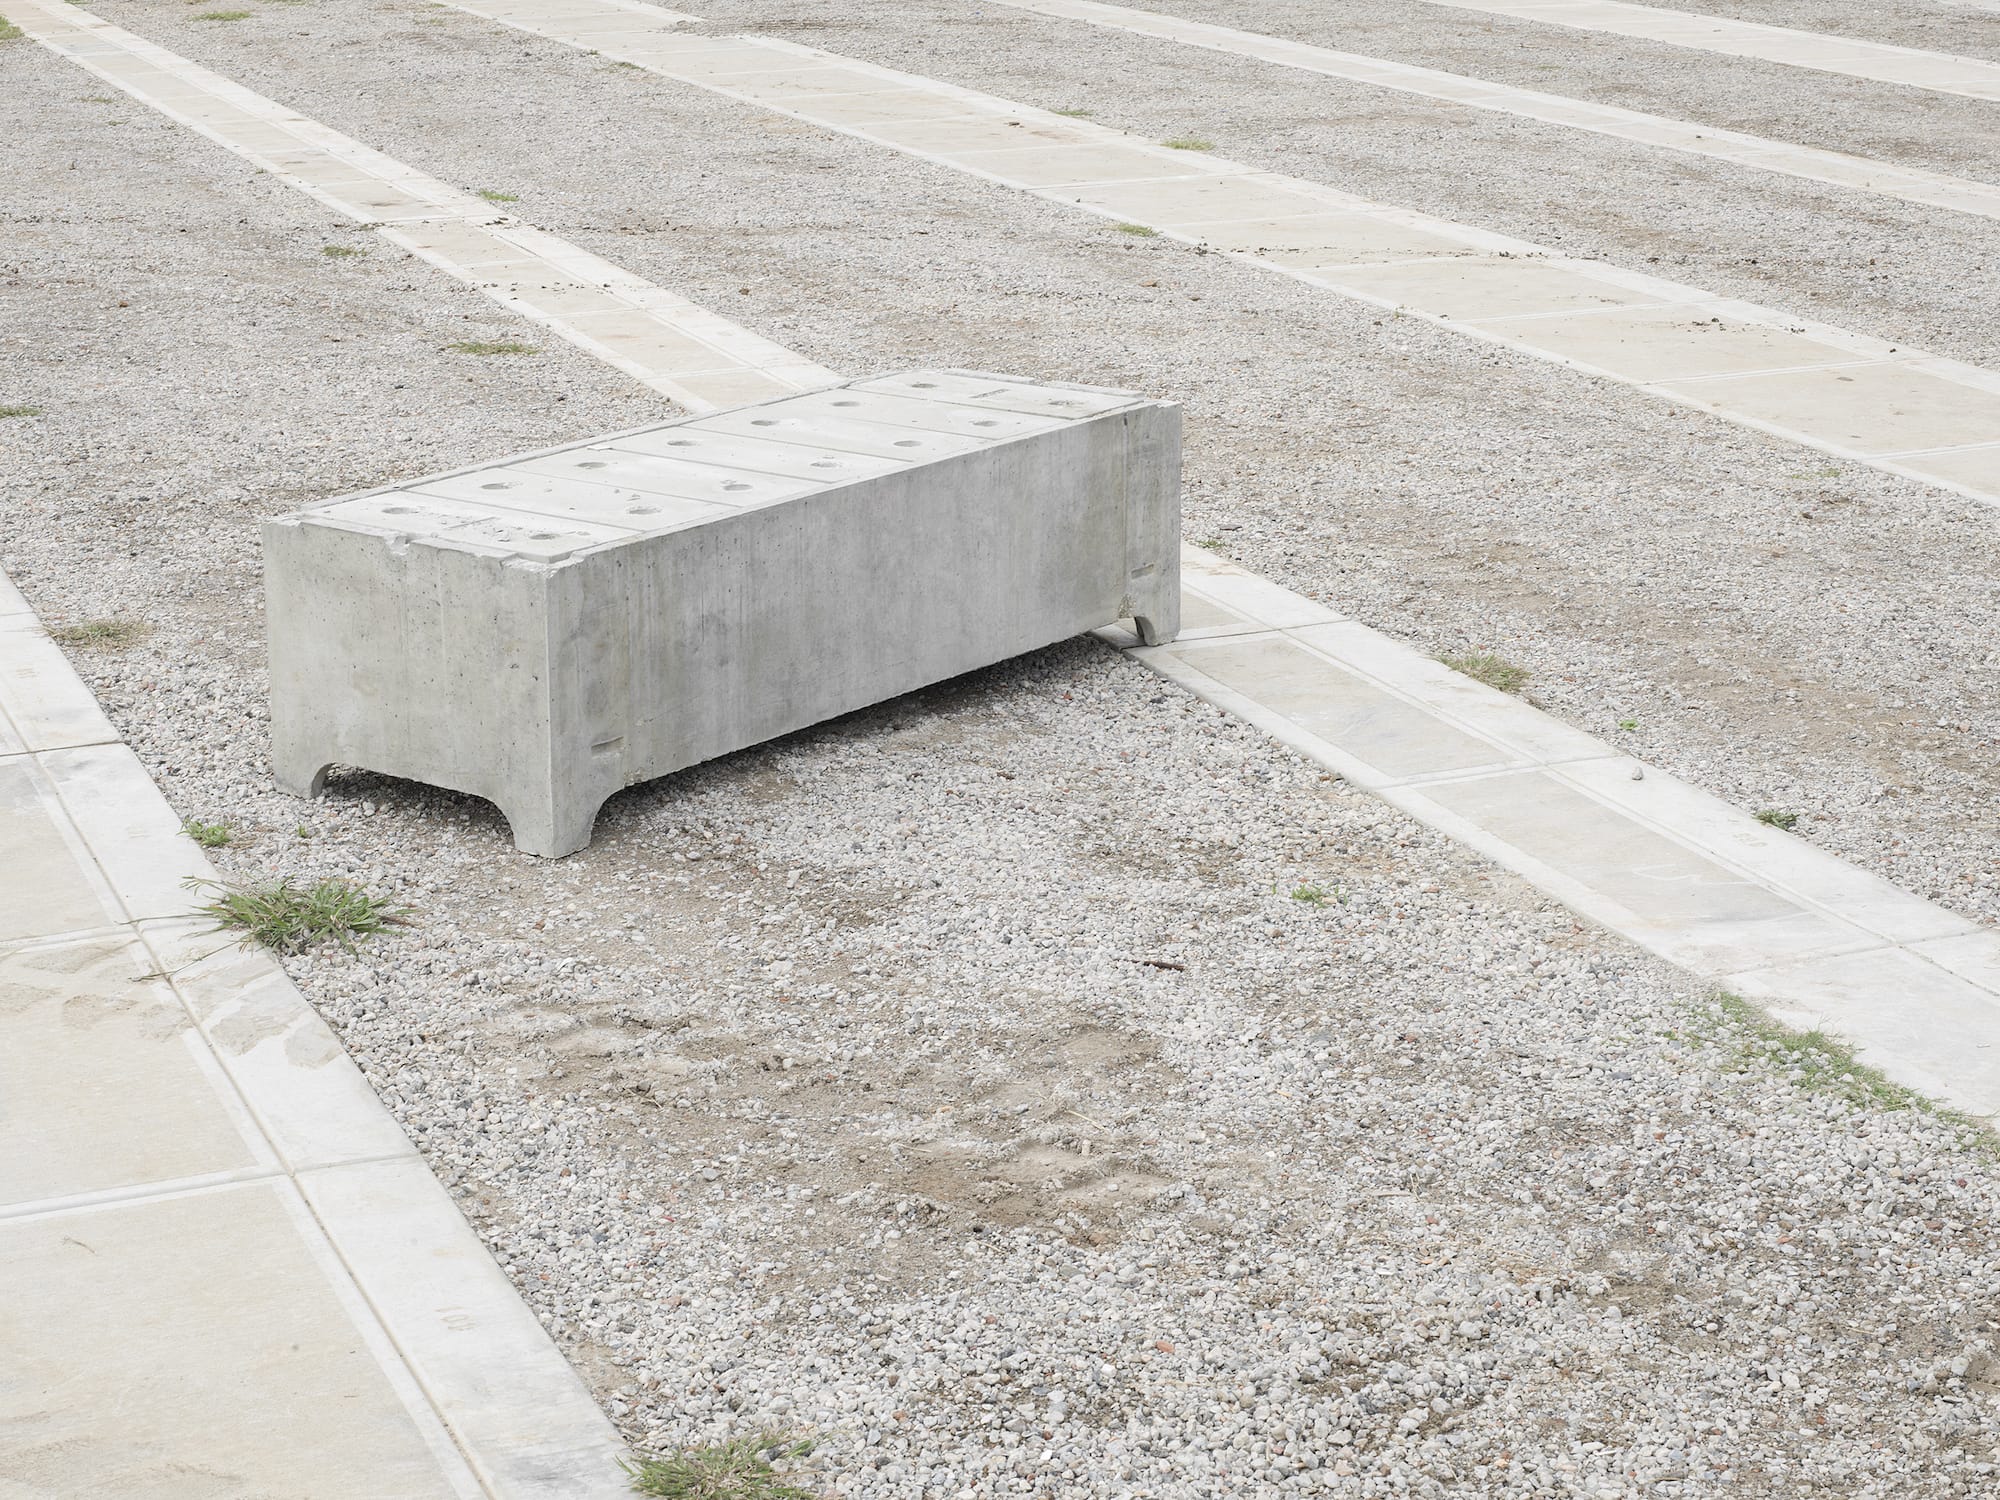 Prefabricated concrete grave liners ready for burial, Sydney. Vault, Izabela Pluta, 2018.